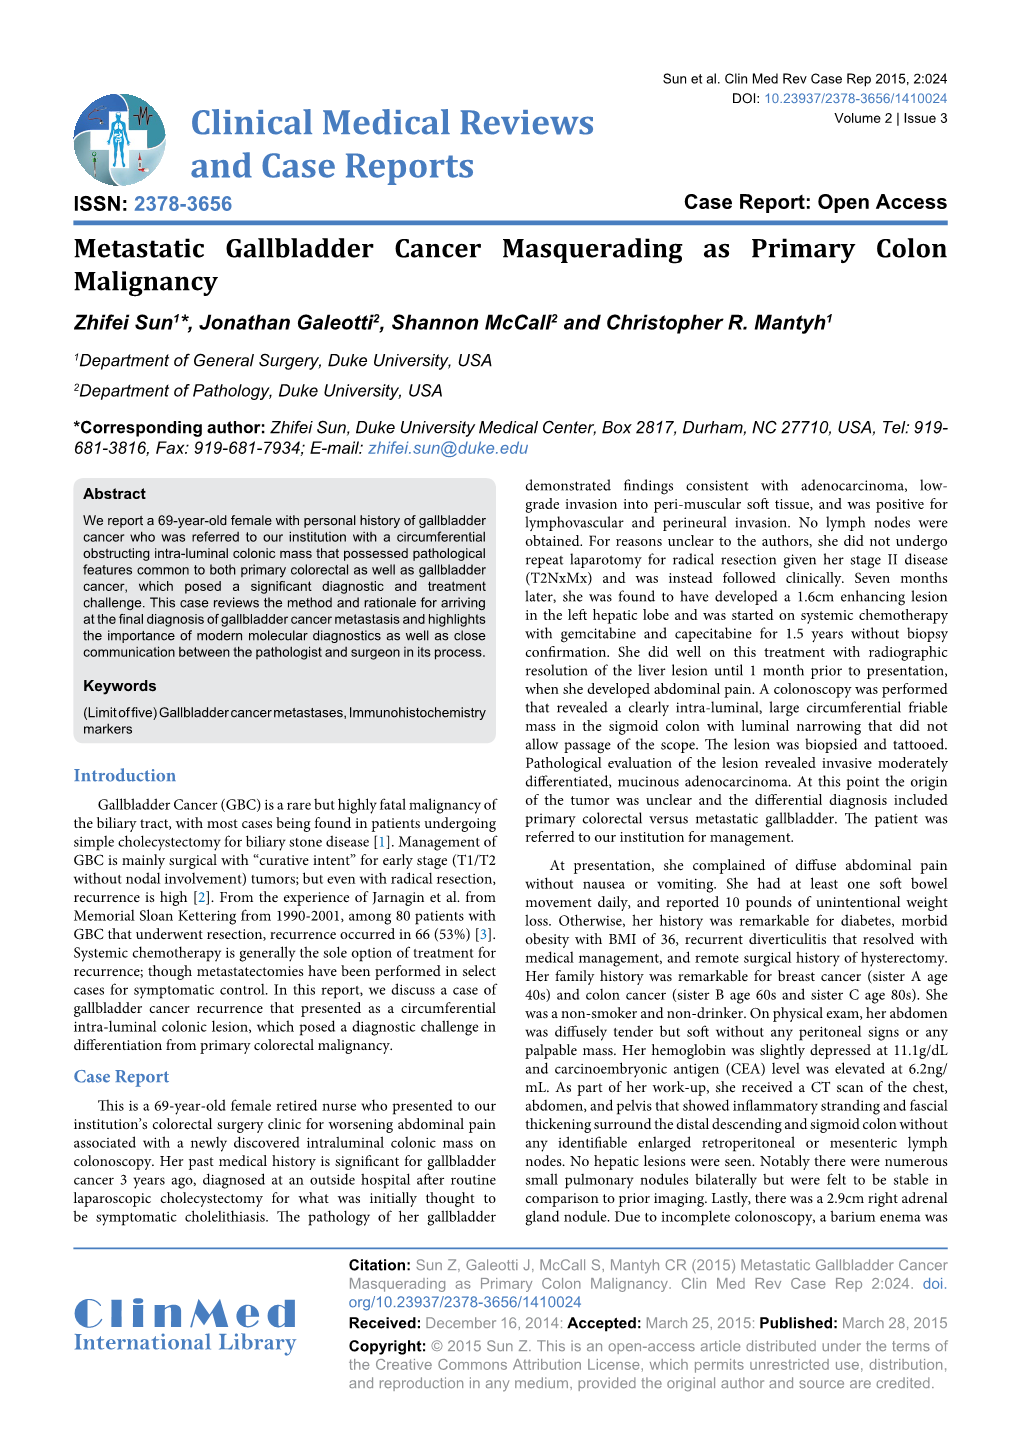 Metastatic Gallbladder Cancer Masquerading As Primary Colon Malignancy Zhifei Sun1*, Jonathan Galeotti2, Shannon Mccall2 and Christopher R